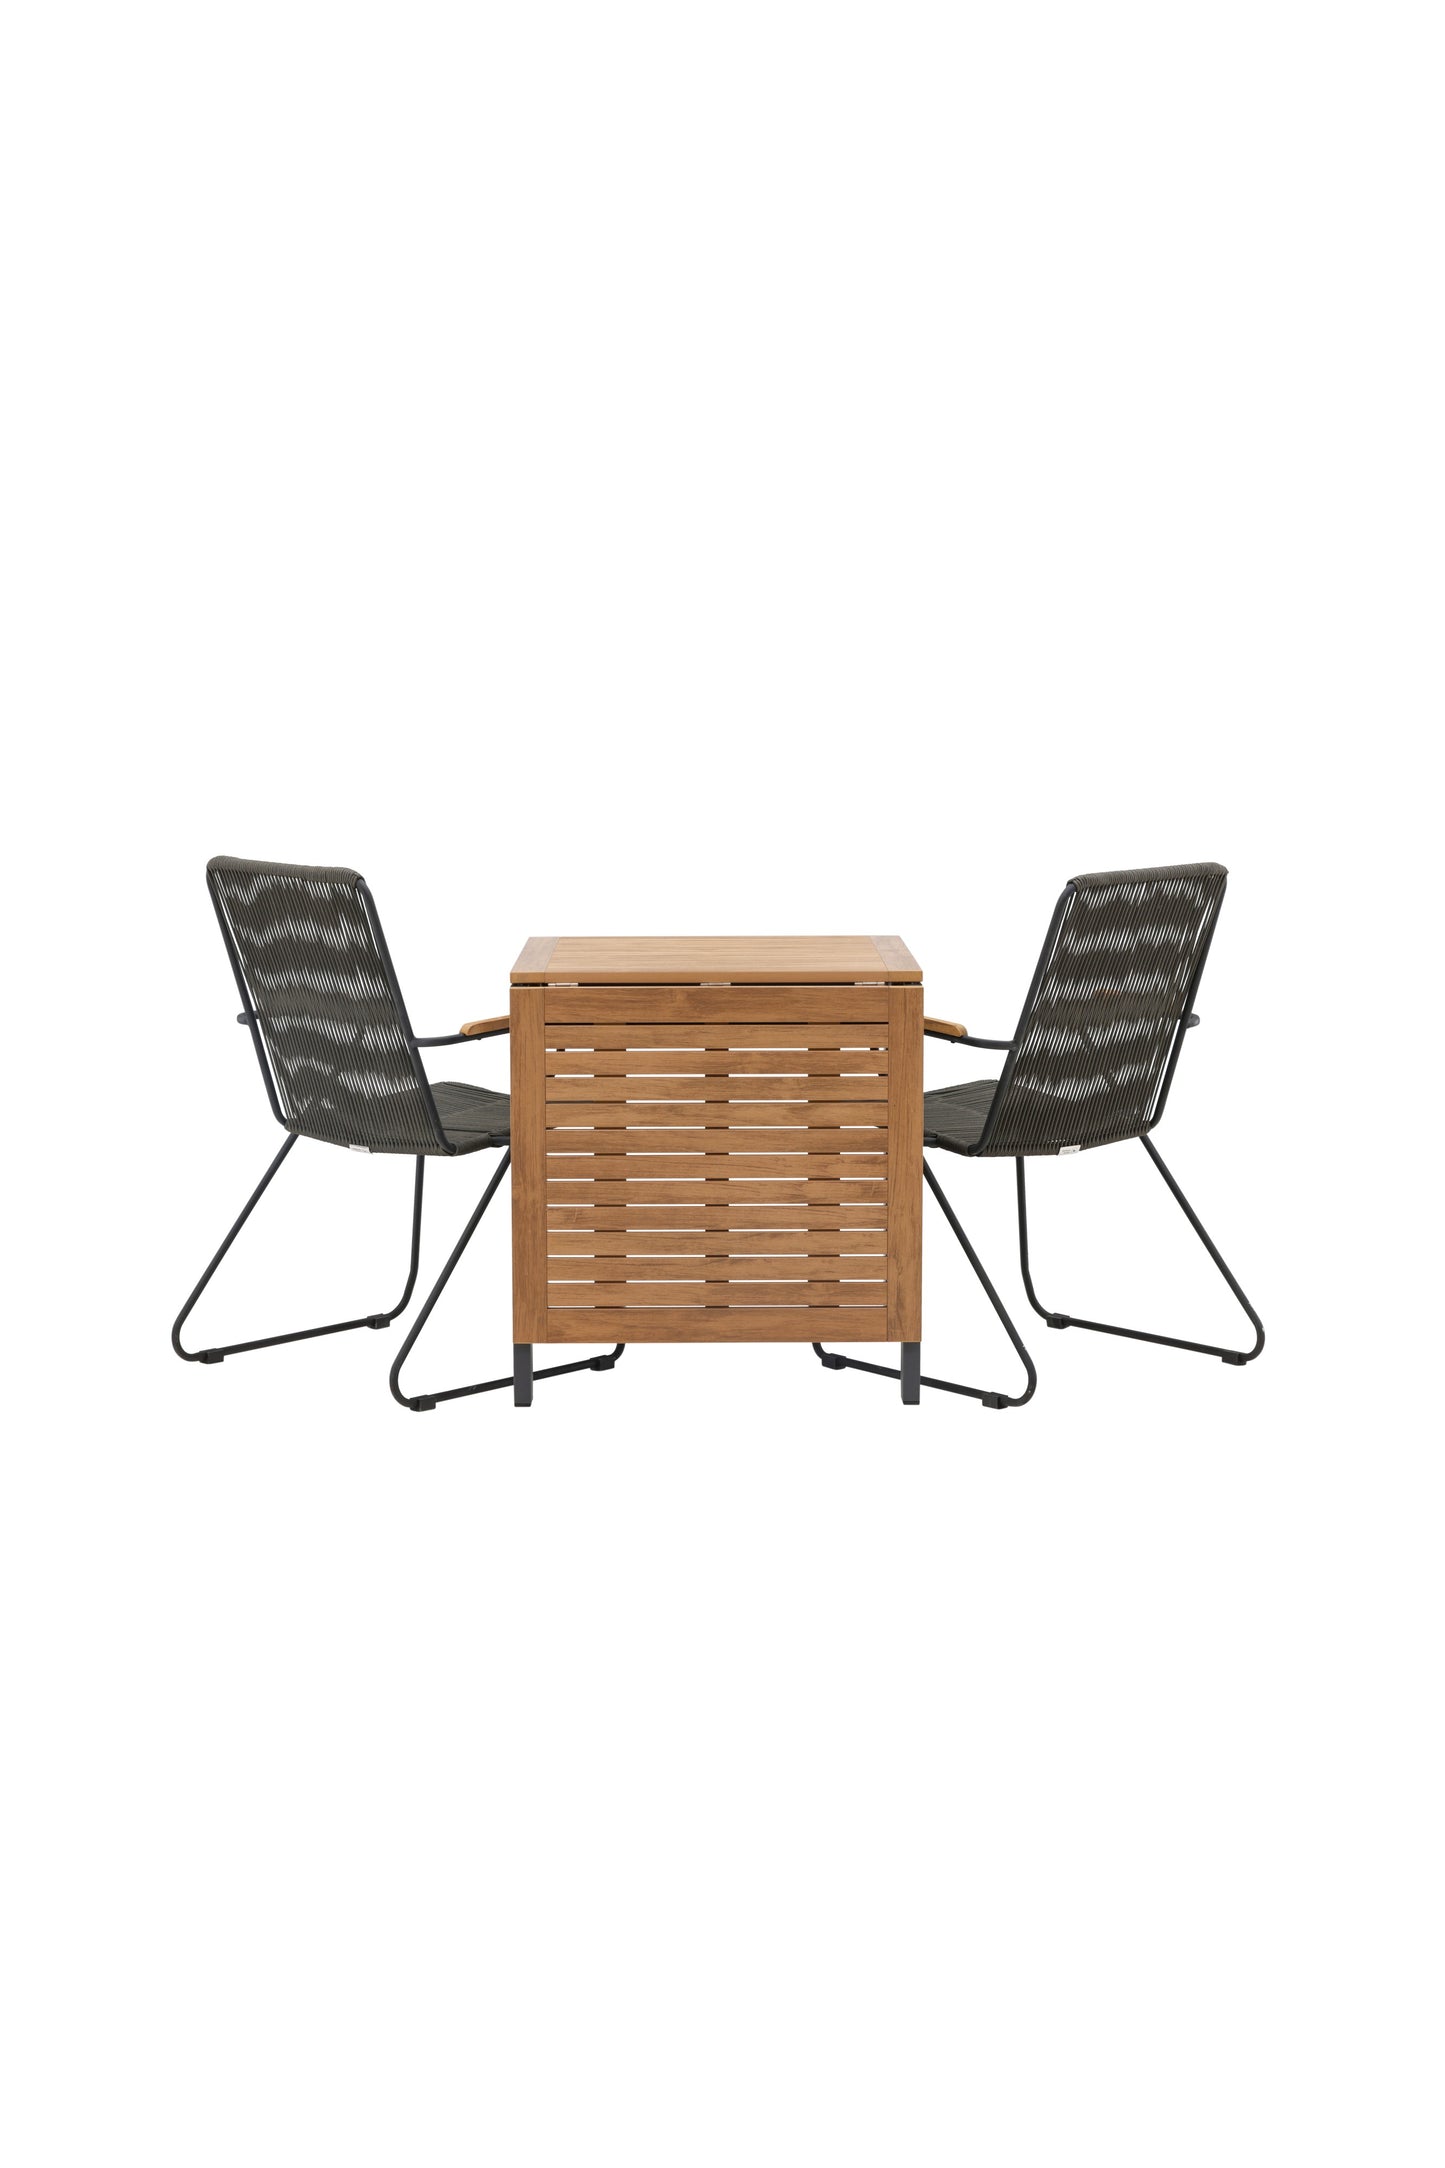 Diego - Cafébord, Aluminium - Sort / Brun Nonwood - Rektangulær 70*70/130* + Bois stol Stål - Sort / Mørkegråt Reb